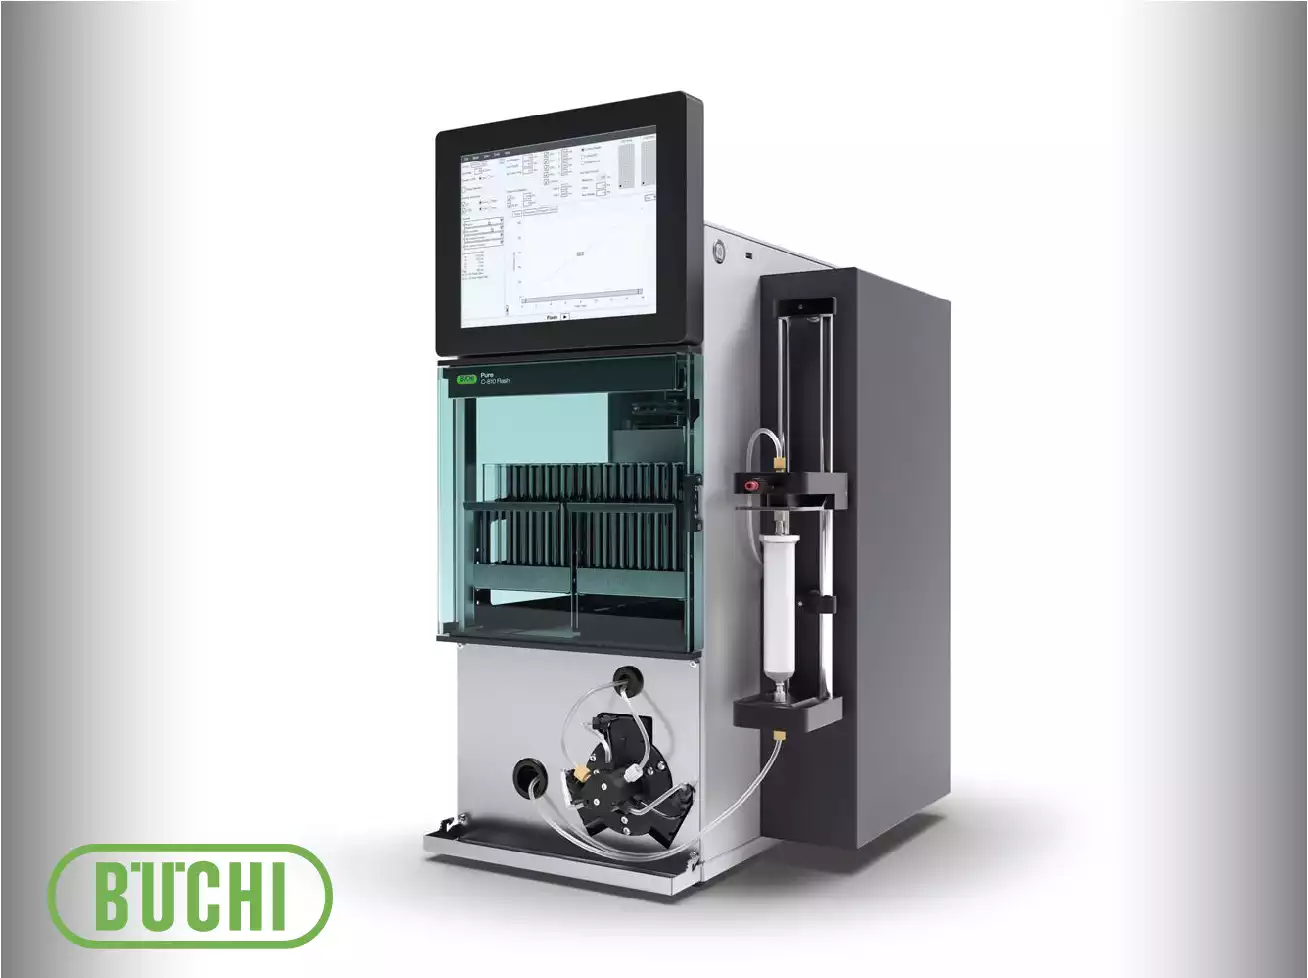 Buchi Preparative Chromatography Solutions